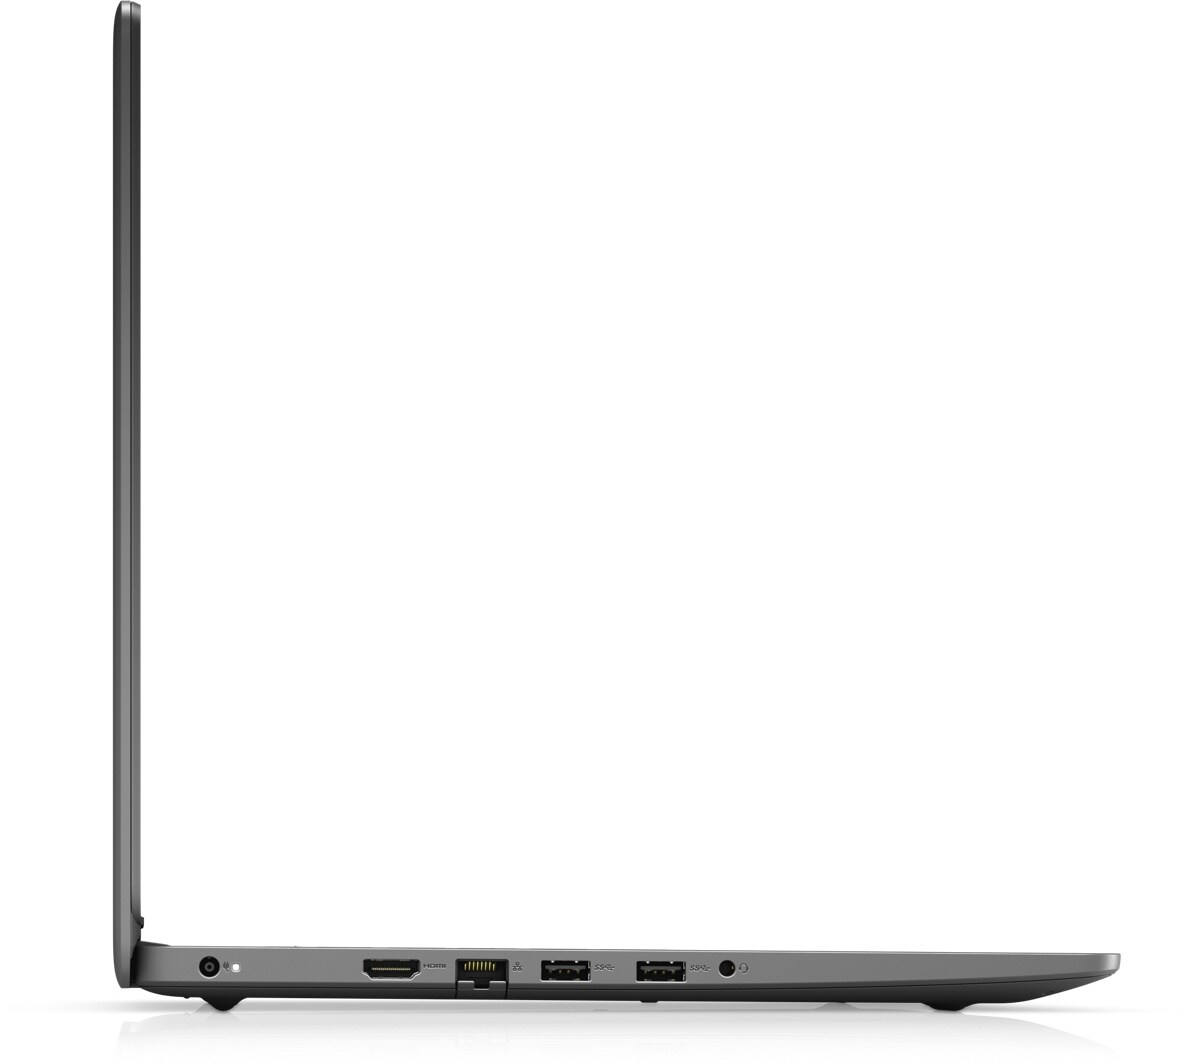 Dell Inspiron 5573 Laptop (Intel i5-1035G1, 8GB RAM, 256GB SSD, Intel HD, Win 10 Home in S mode)